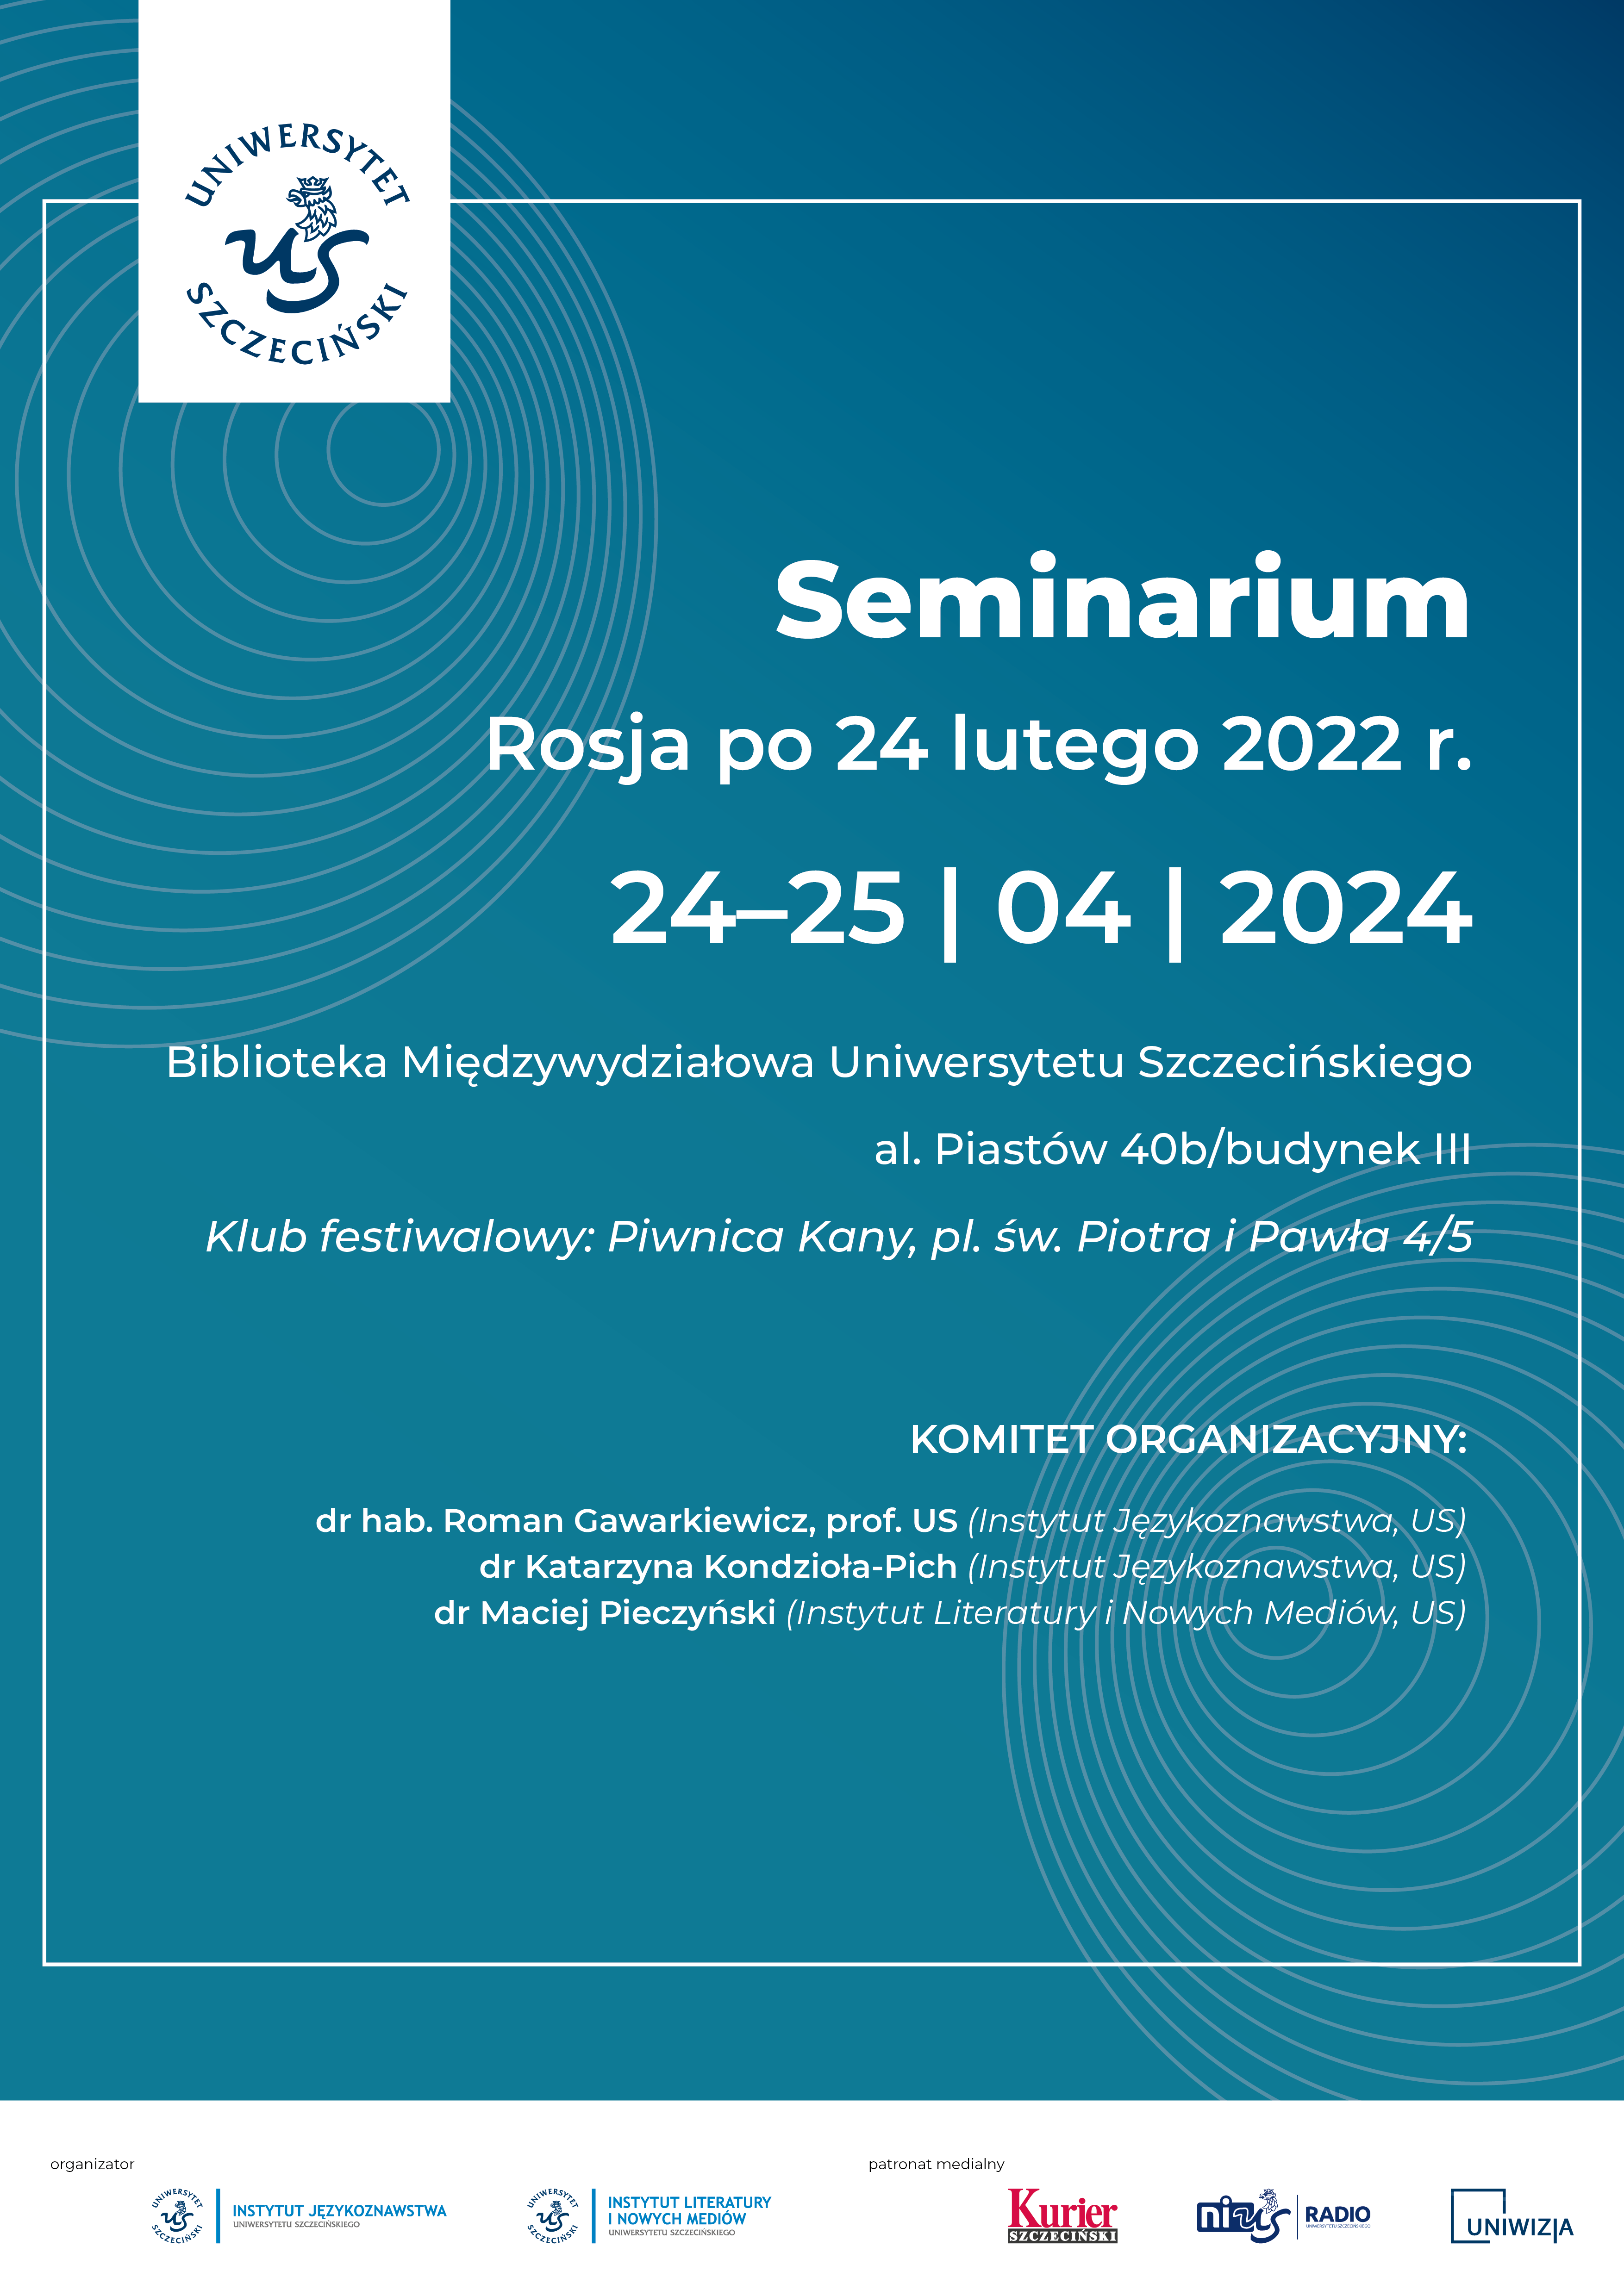 Seminarium „Rosja po 24 lutego 2022 r.”